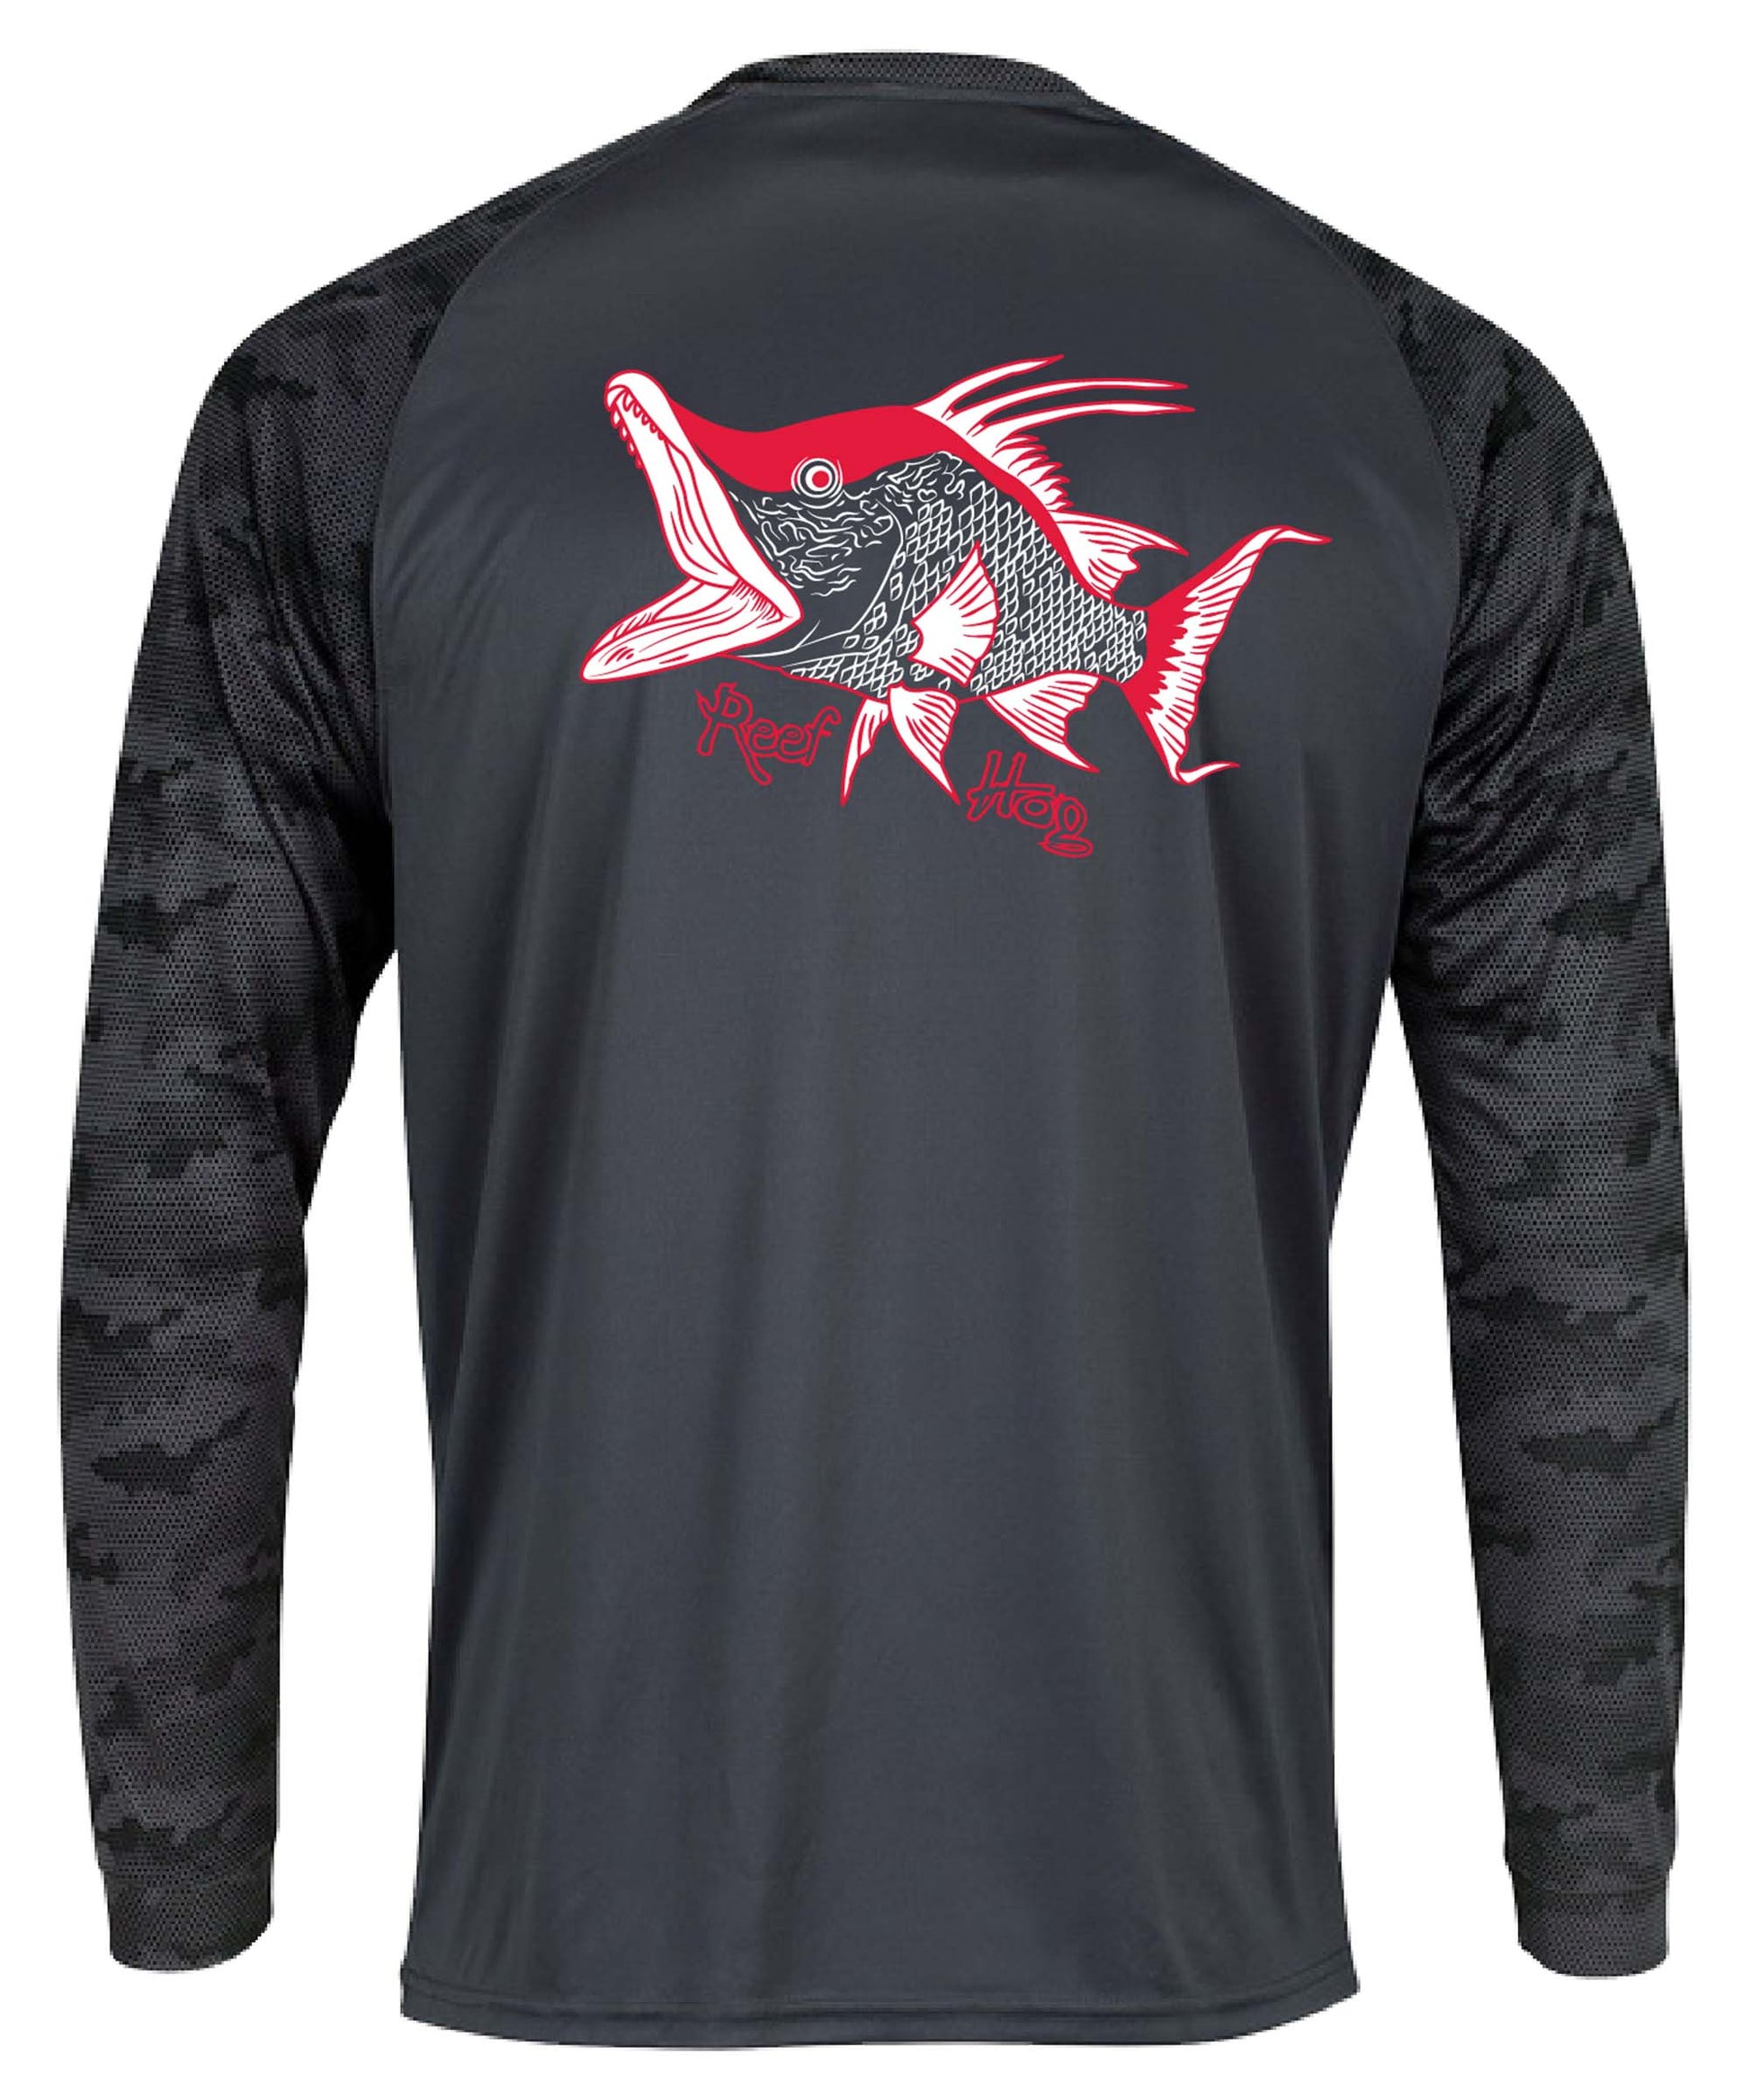 Hogfish Reef Hog Performance Dry-Fit Fishing 50+Upf Sun Shirts S / Graphite Camo L/S - unisex